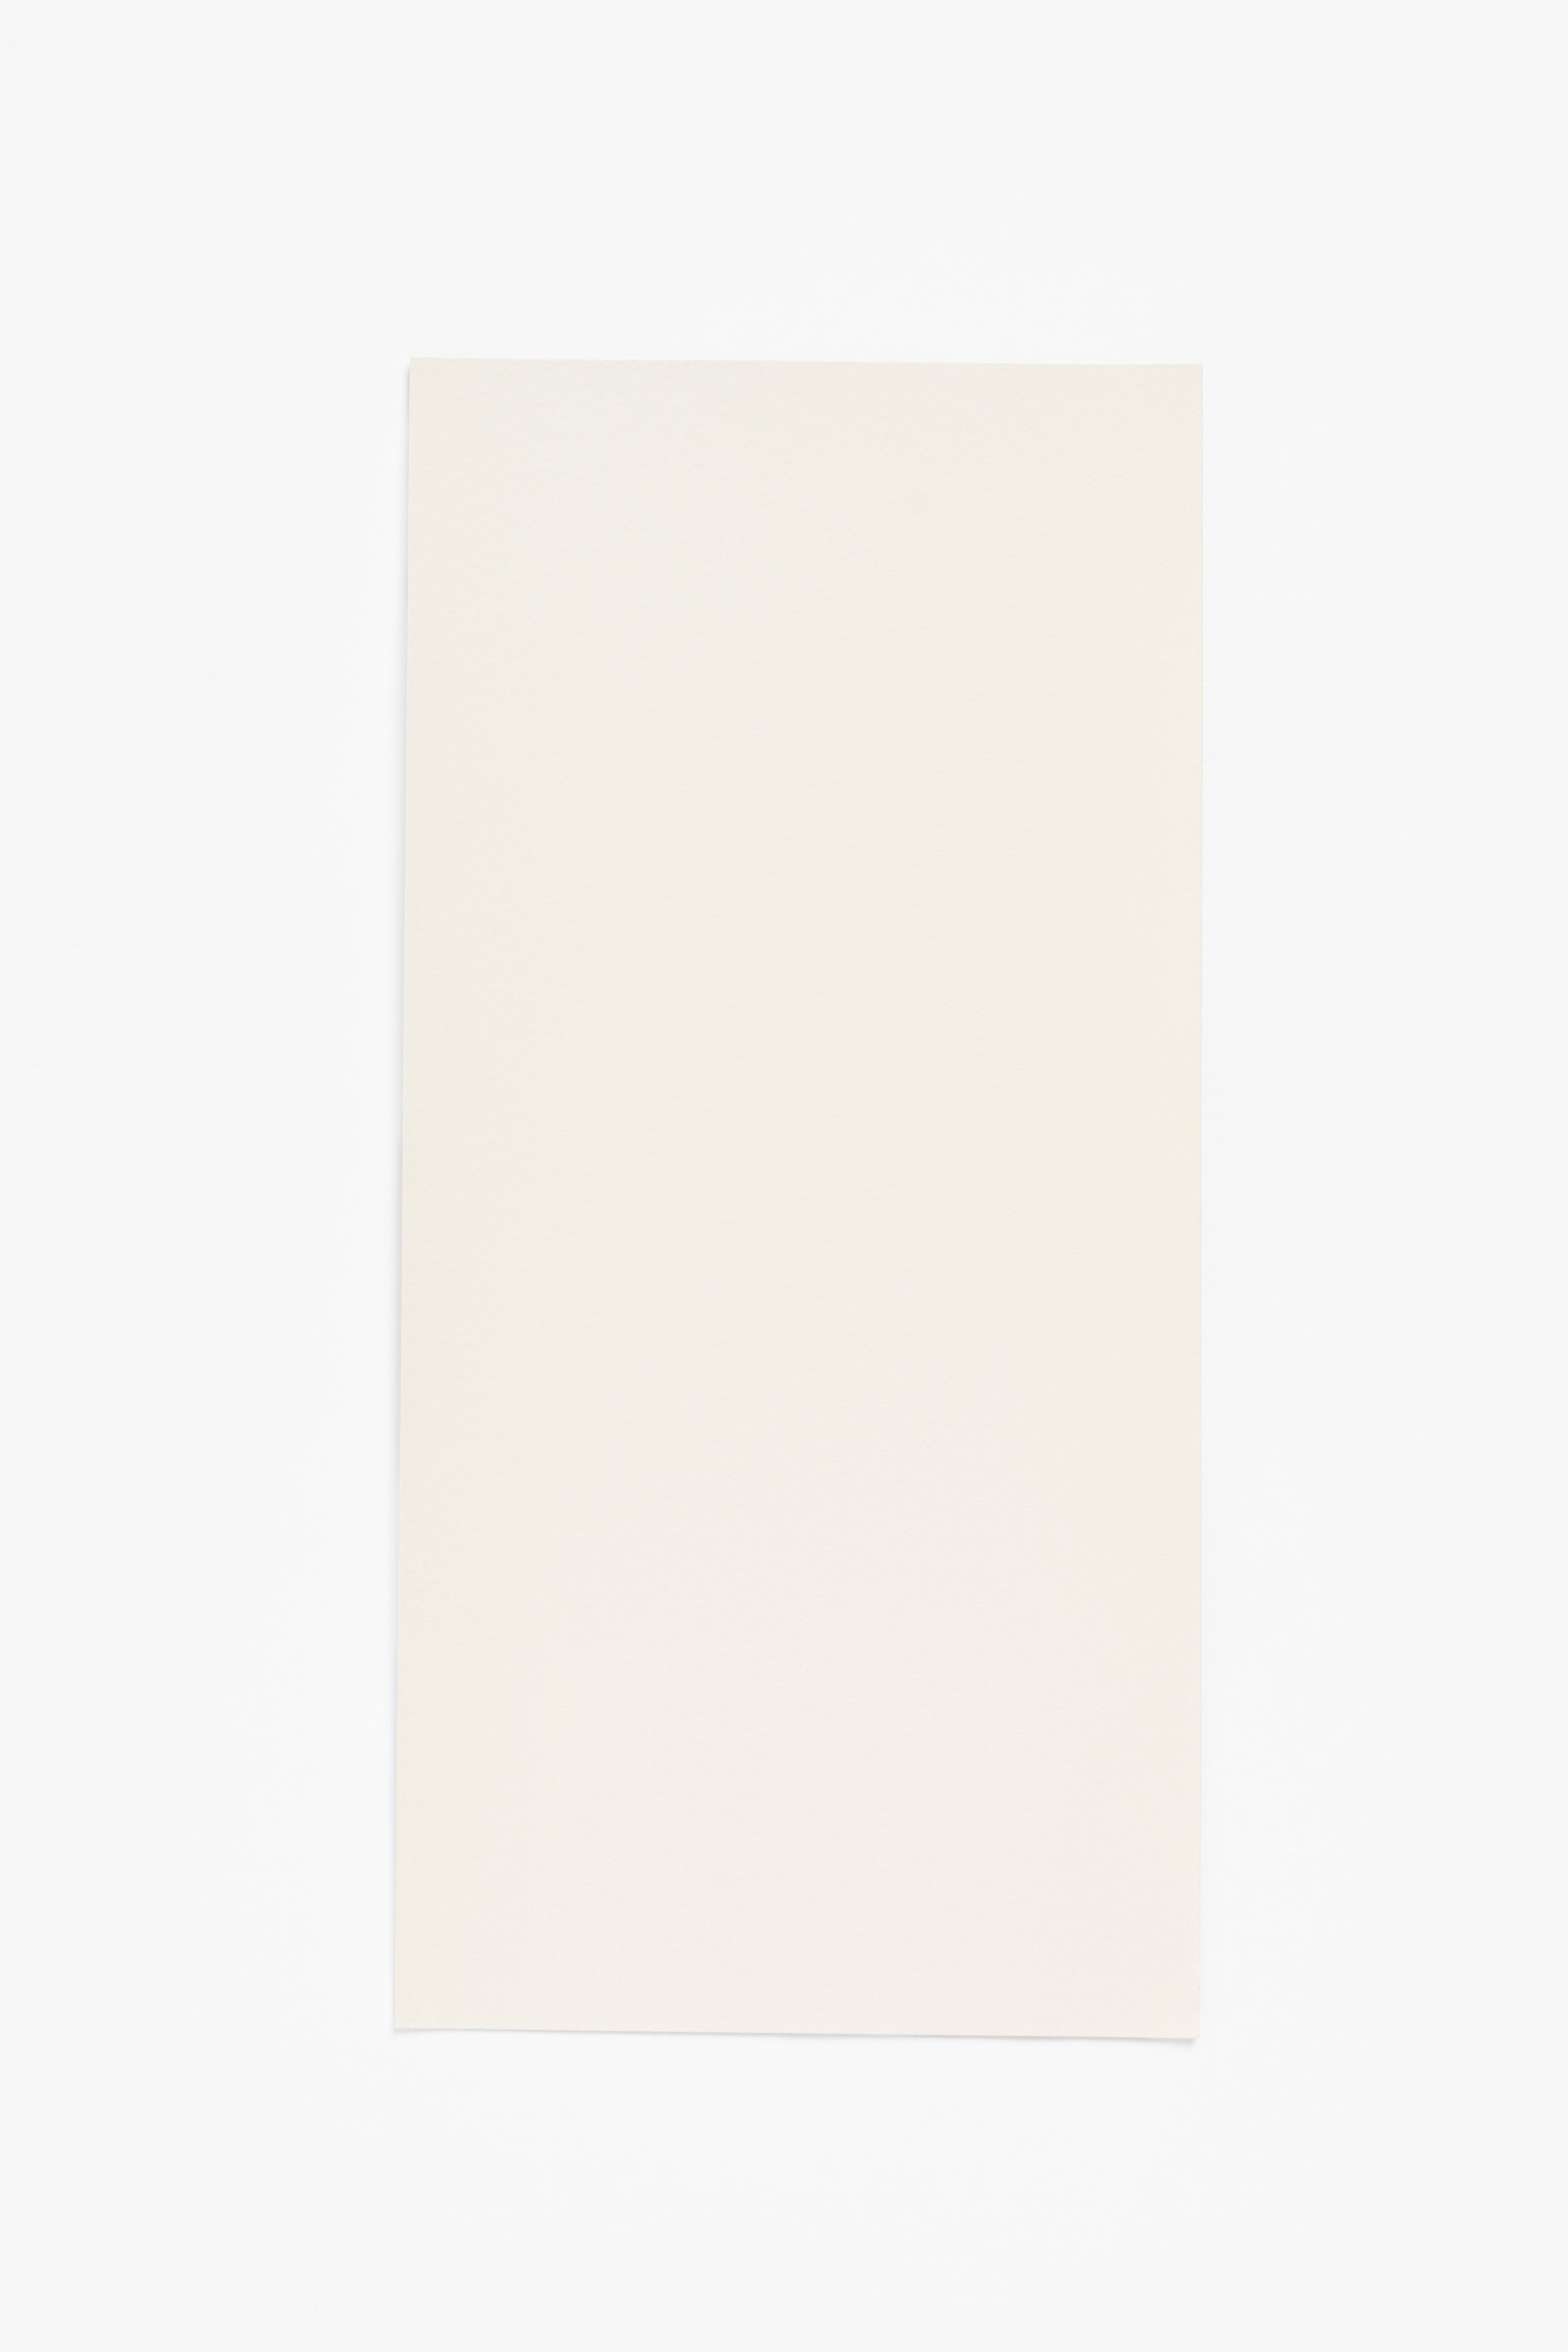 Pale Beach — a paint colour developed by Norm Architects for Blēo